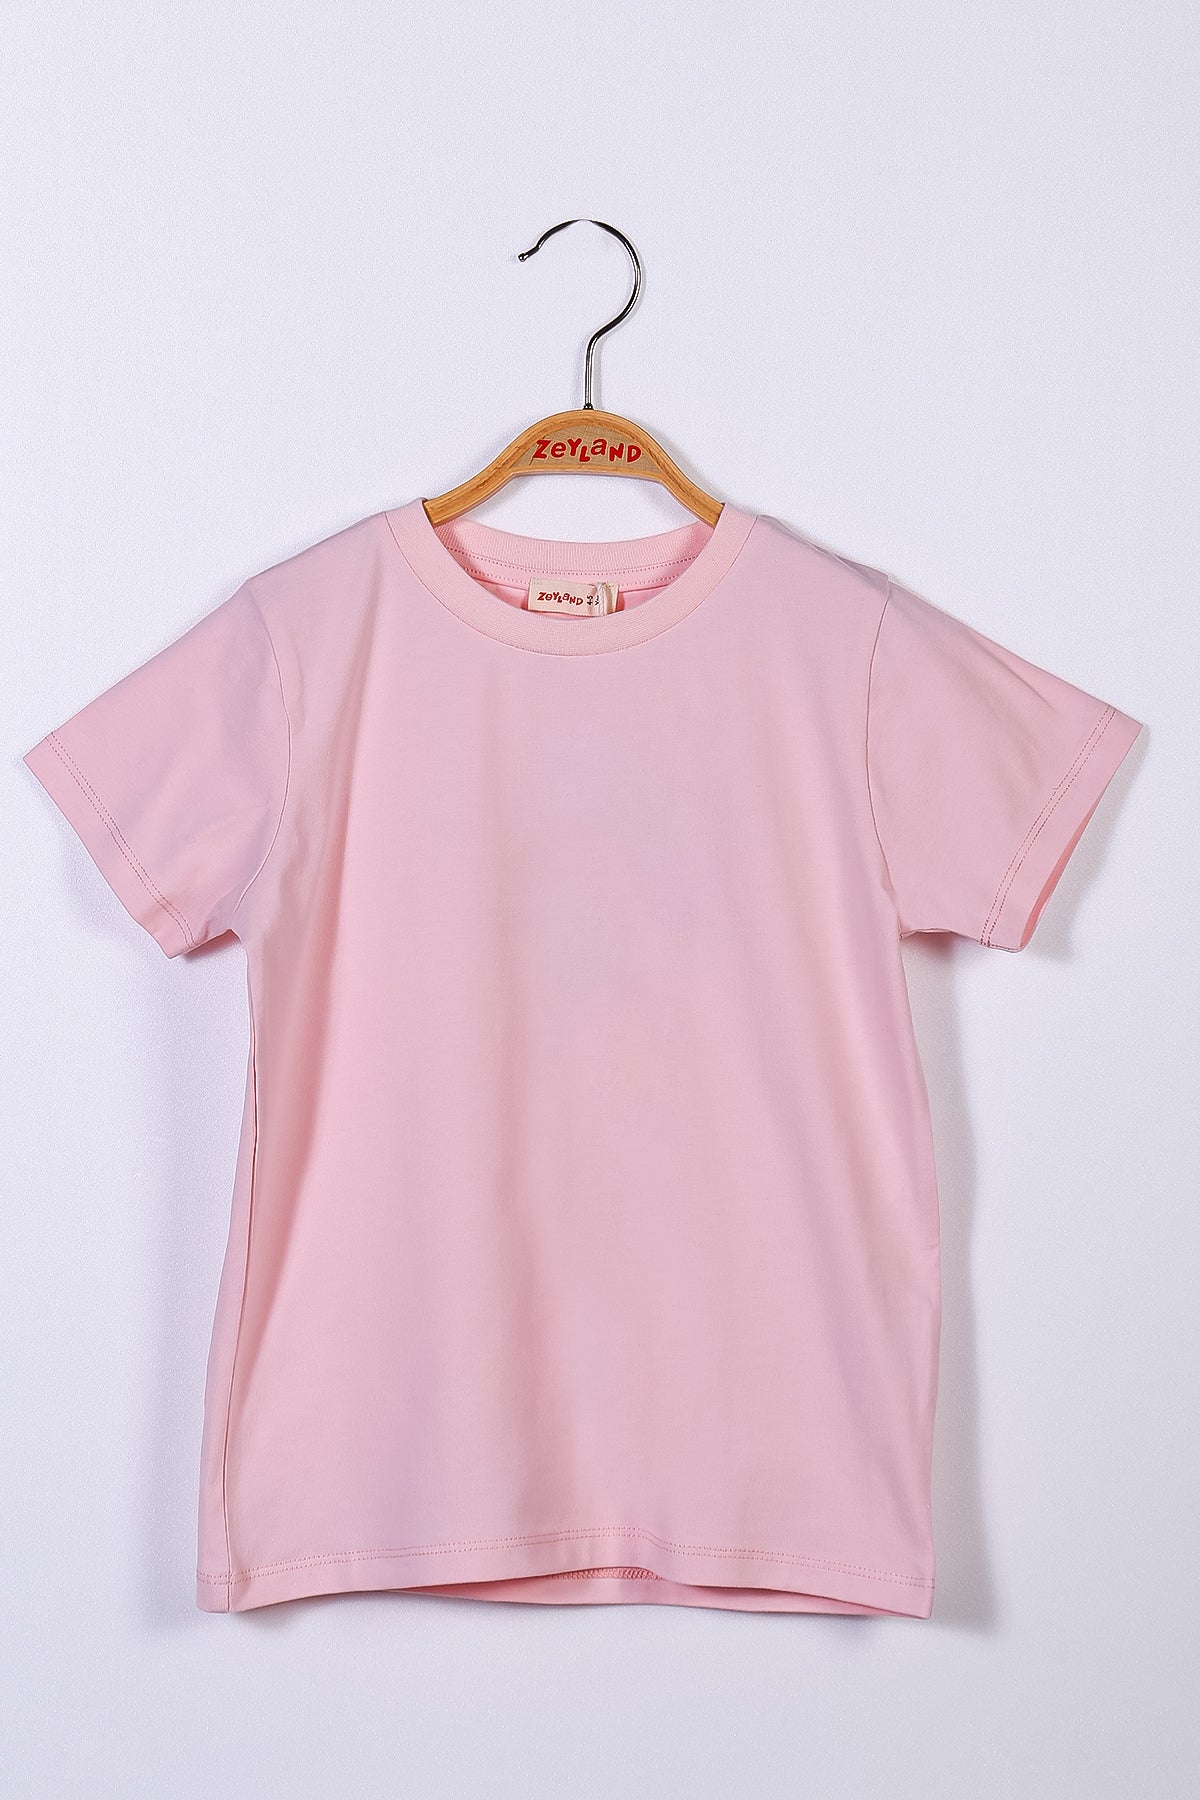 Pembe Kız Bebek Basic T-Shirt (9ay-4yaş)-0